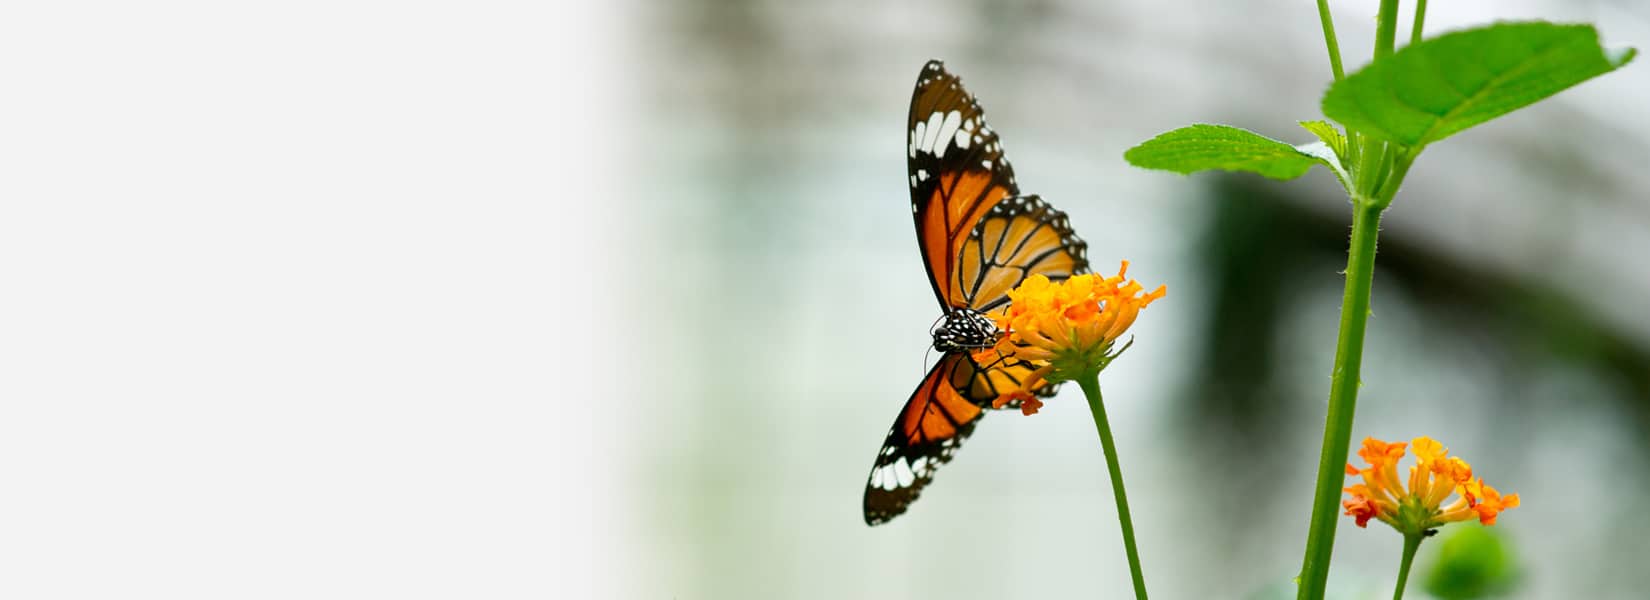 monarch butterfly lighting on a flower